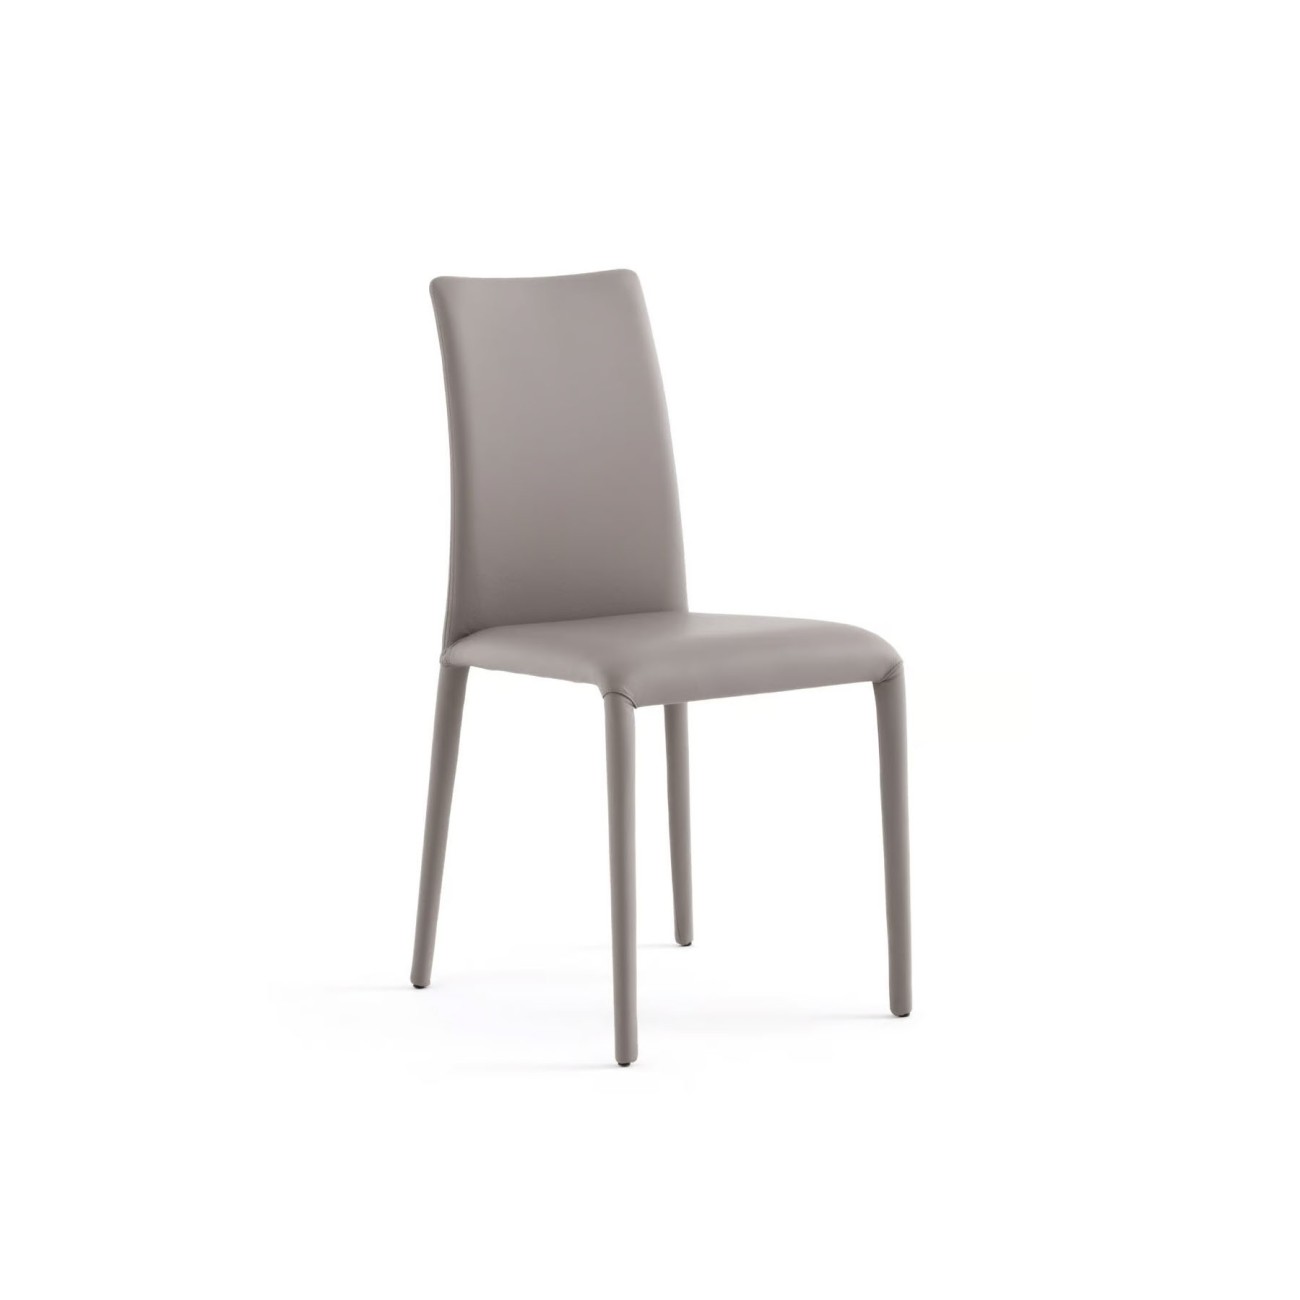 Altea Stitch Padded Chair, Eforma